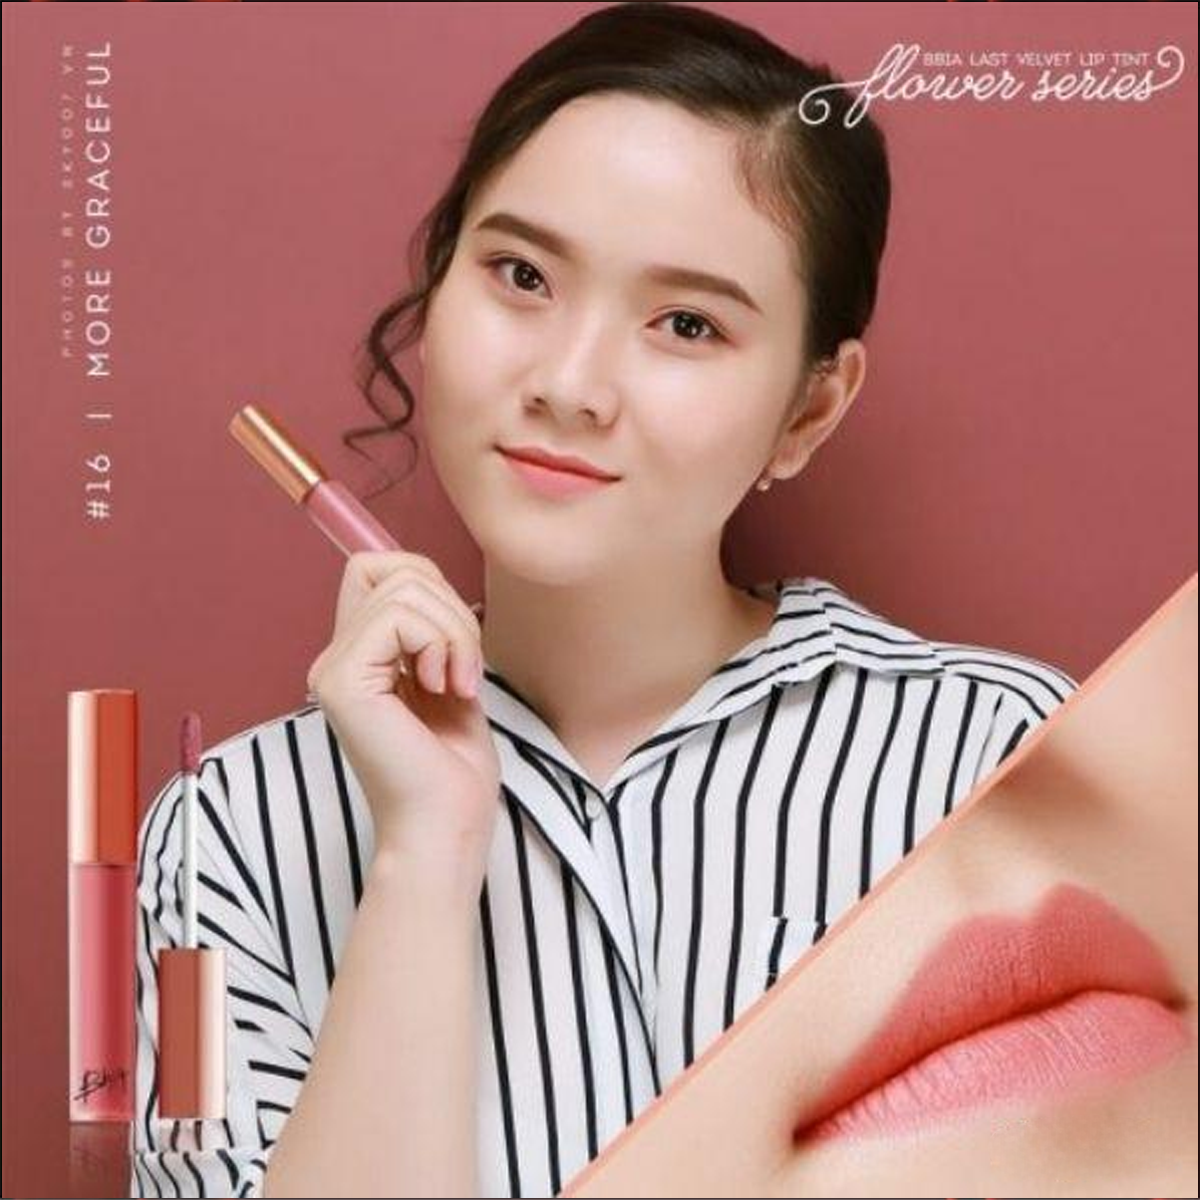 Bbia- Last Velvet Lip Tint IV Flower Series Makeup Lipstick  Cosmetic Lip Tint